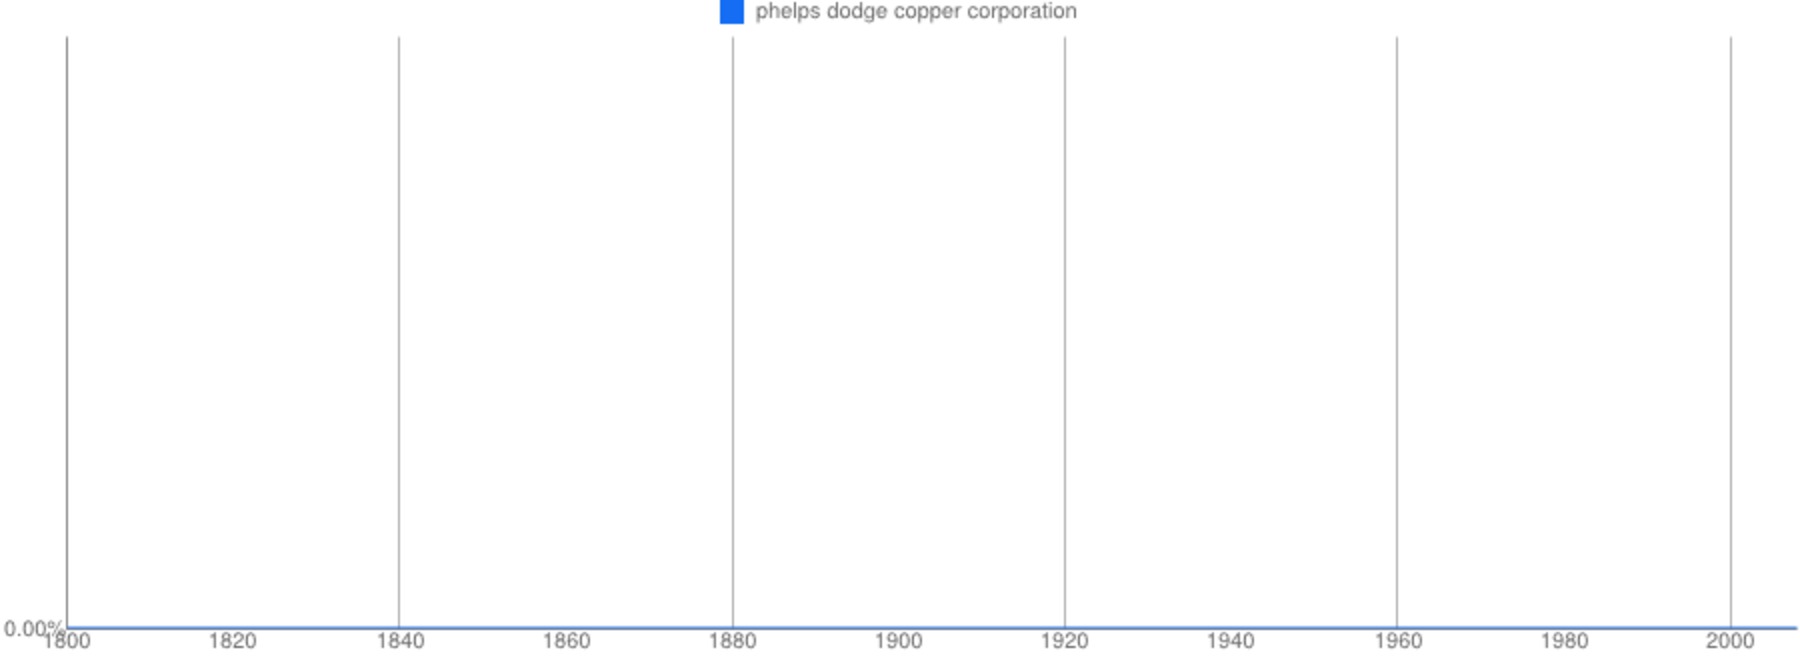 Google Books Ngram Viewer: phelps dodge copper corporation